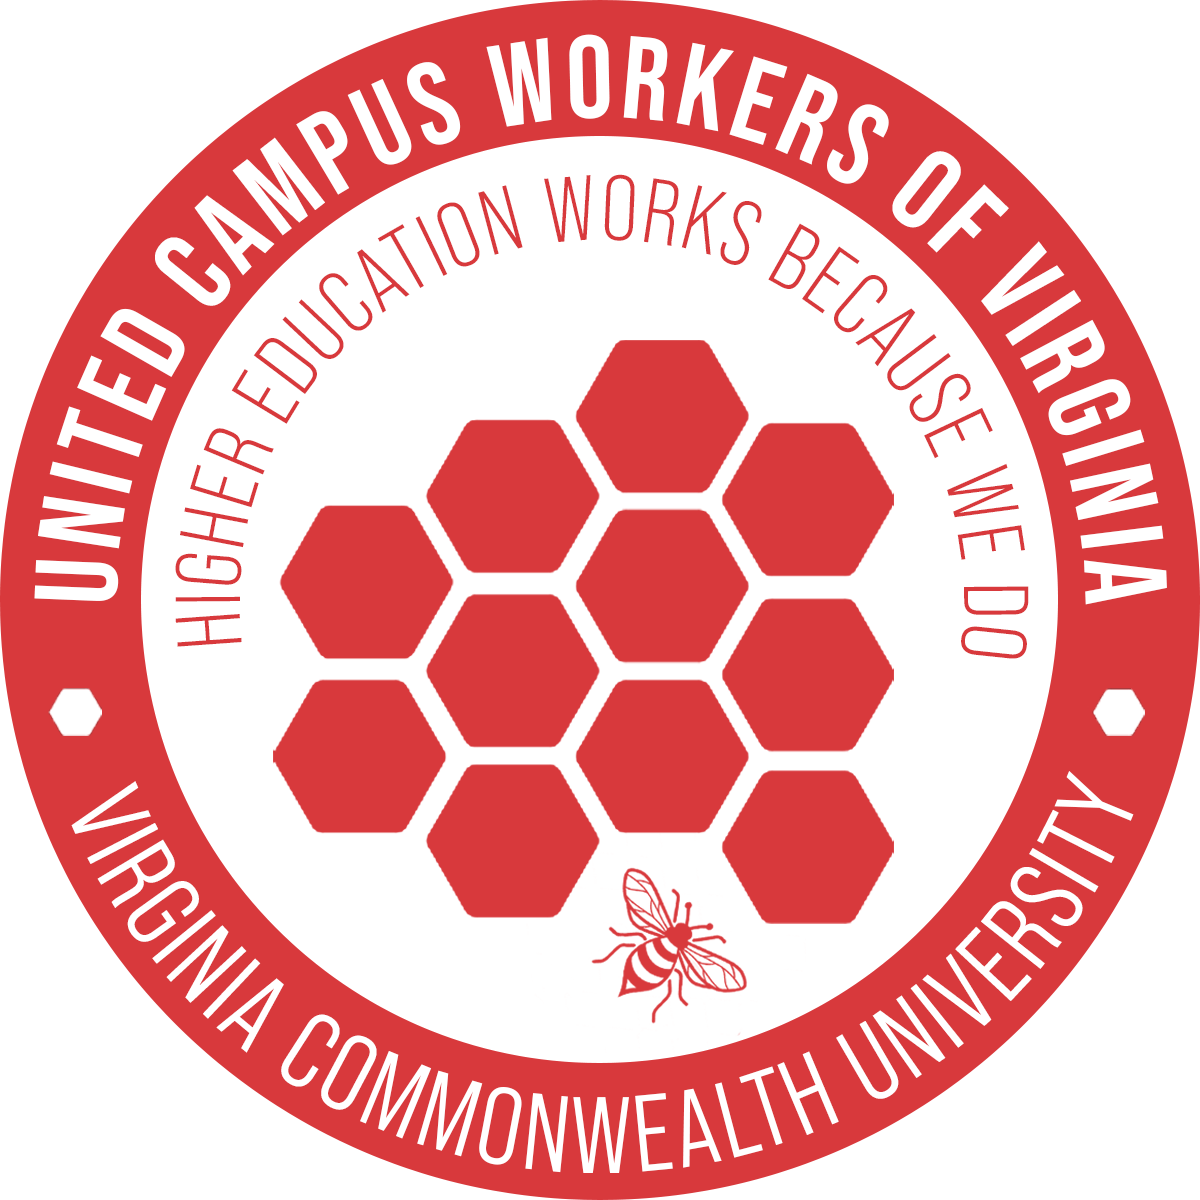 United Campus Workers of Virginia - Virginia Commonwealth University